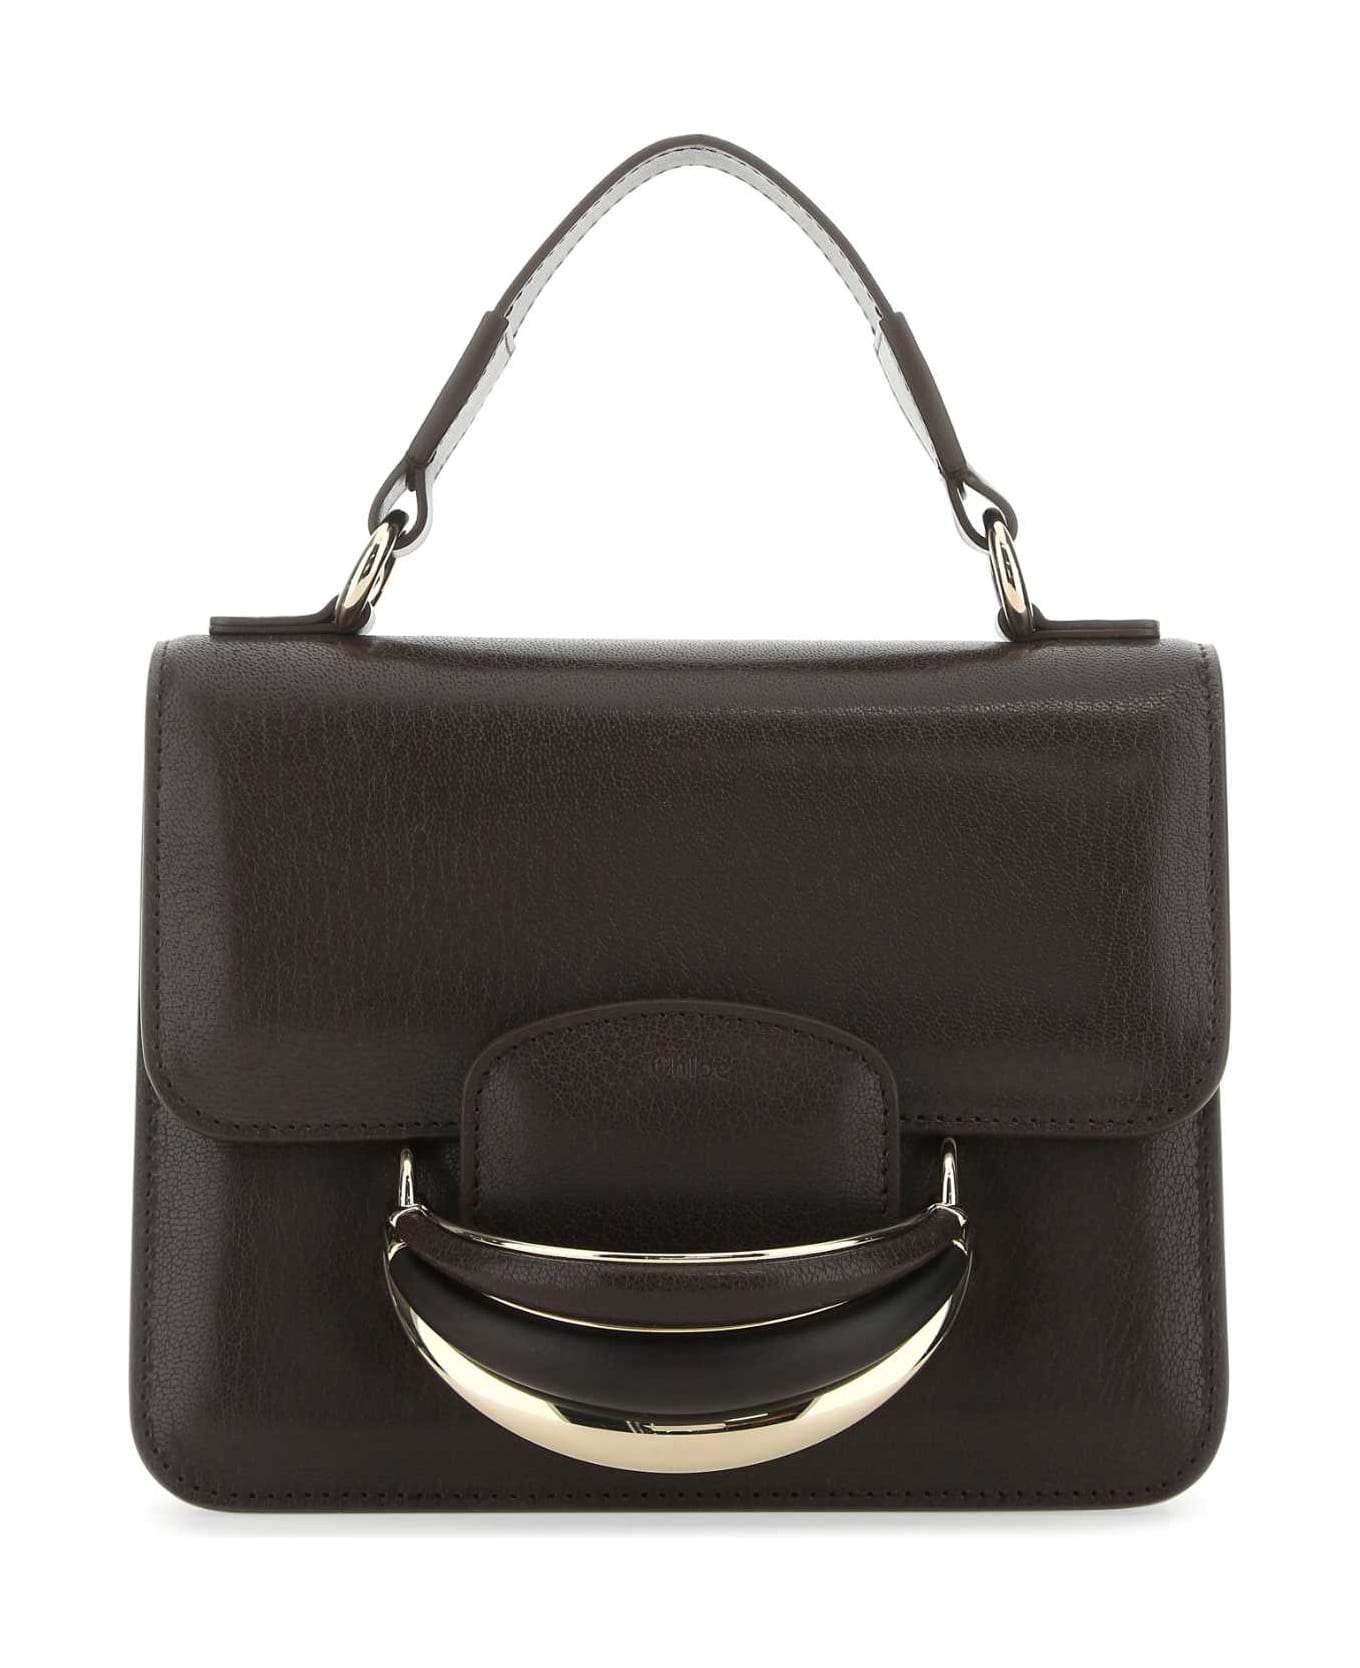 Chloé Dark Brown Leather Small Kattie Handbag - 297 トートバッグ